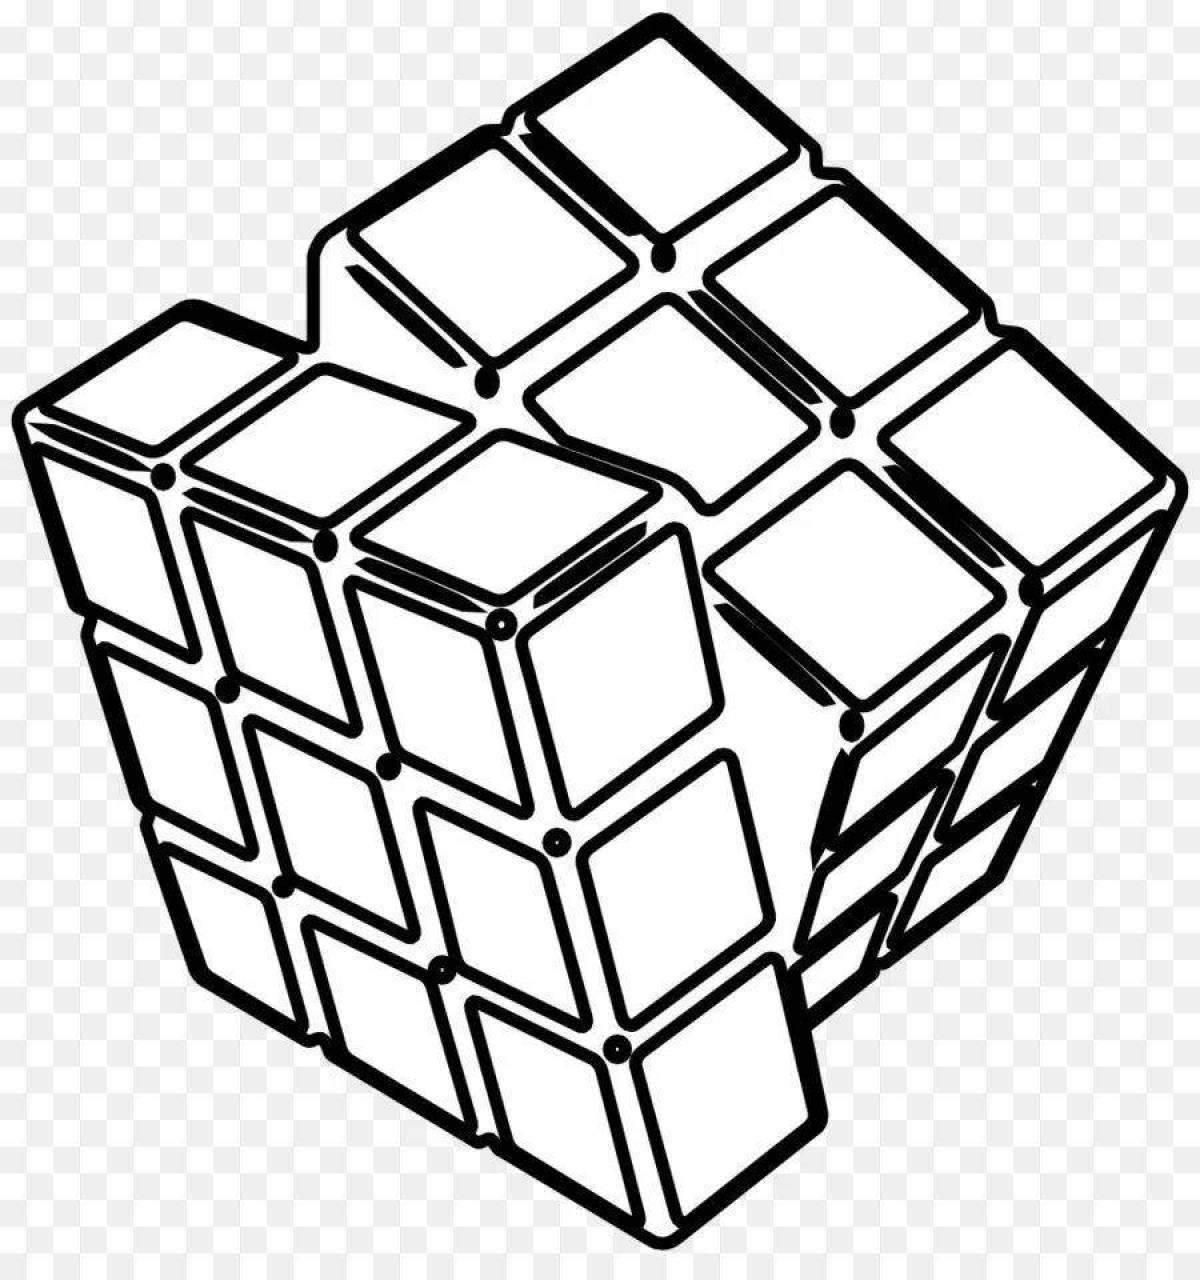 Intricate rubik's cube coloring